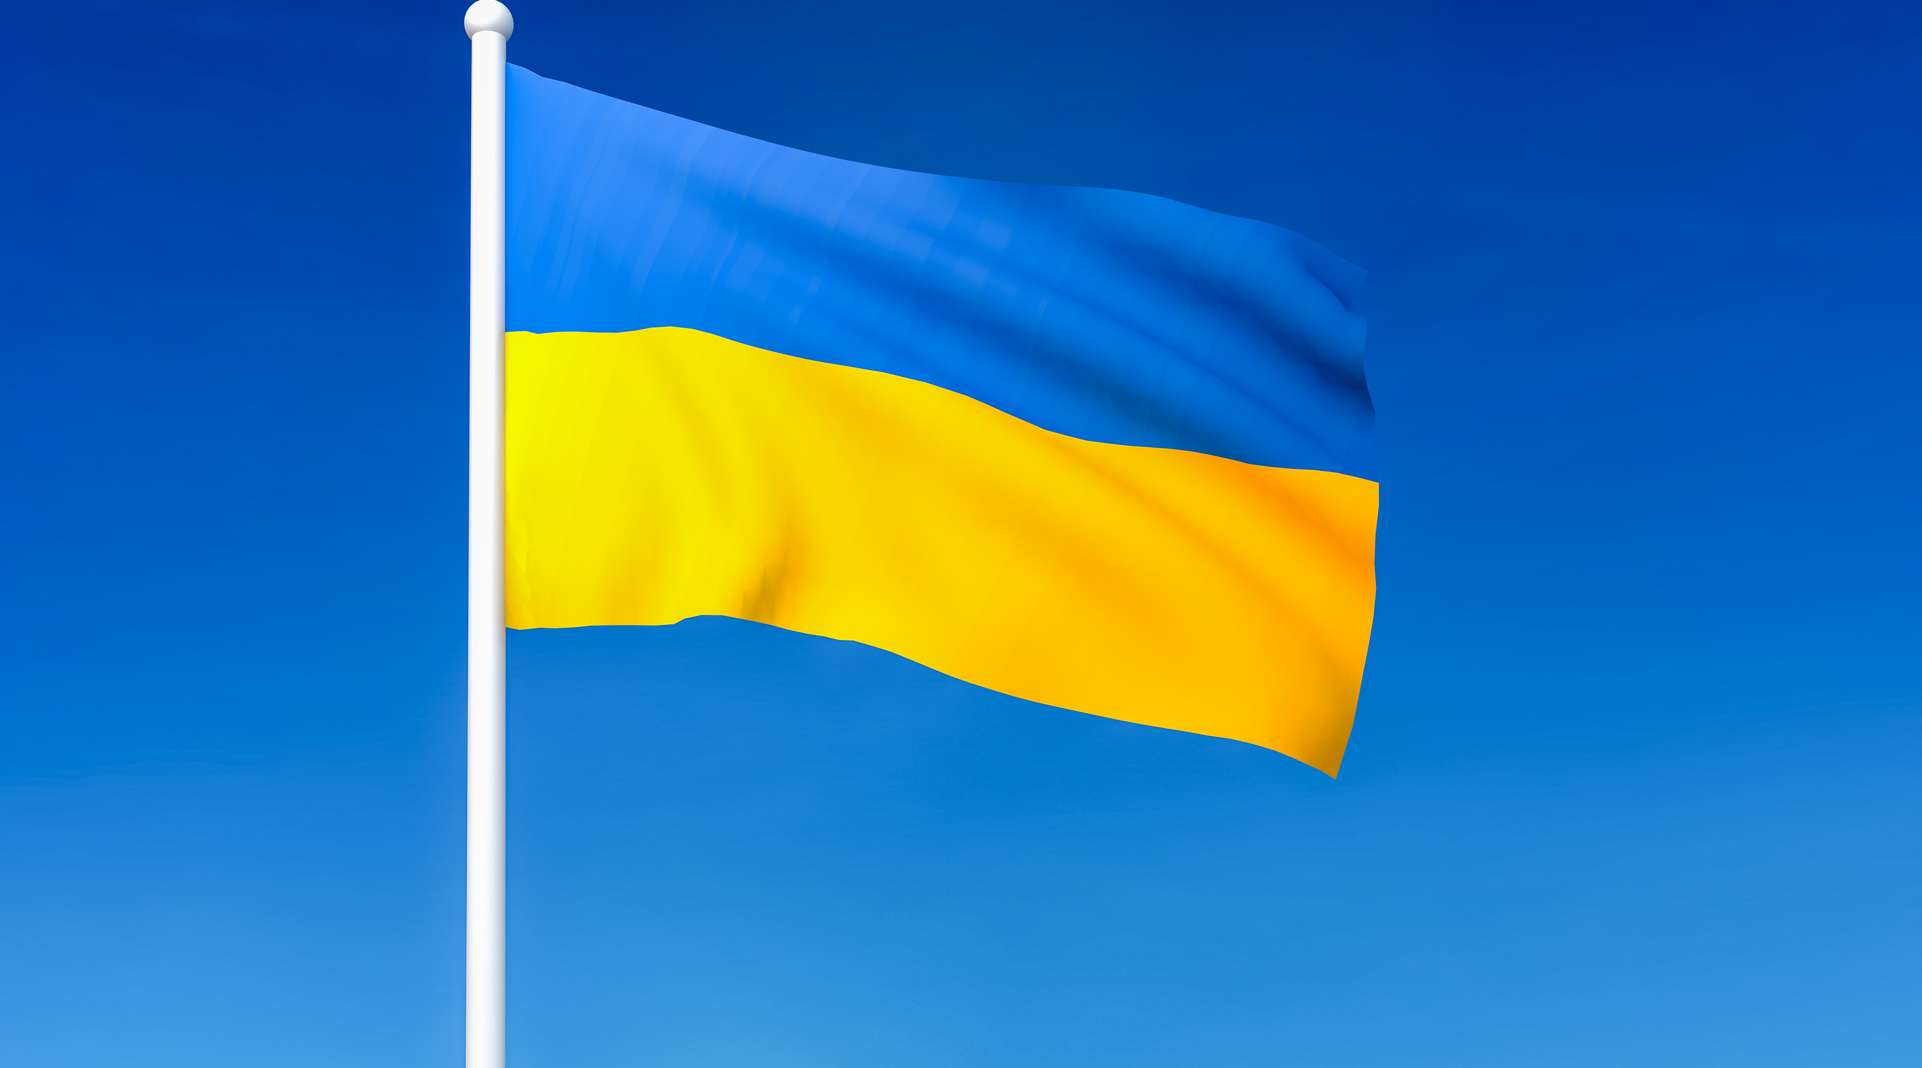 Waving flag of Ukraine on the blue sky background - 3D rendered